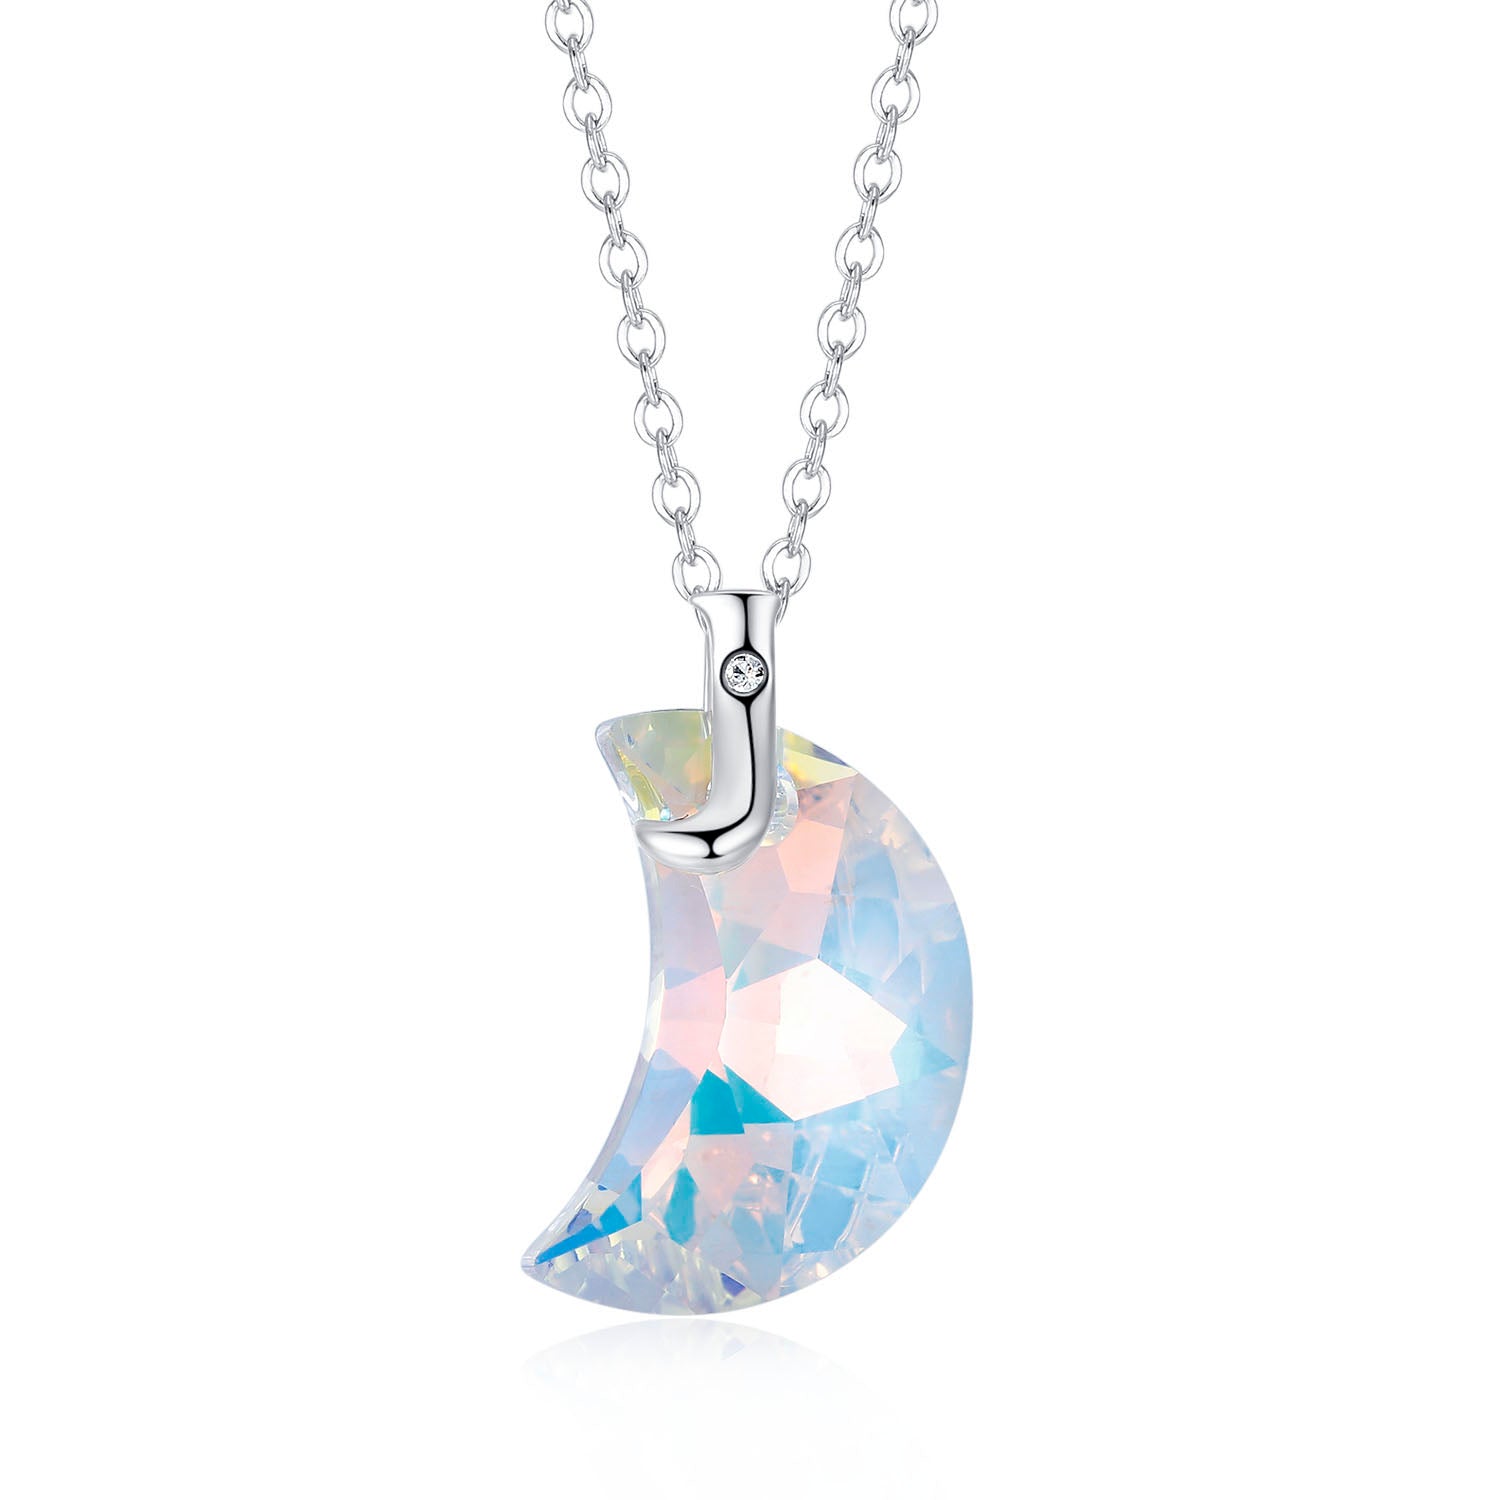 Planet J 925 Sterling Silver Luna Pendant Necklace with Swarovski Elements Crystals